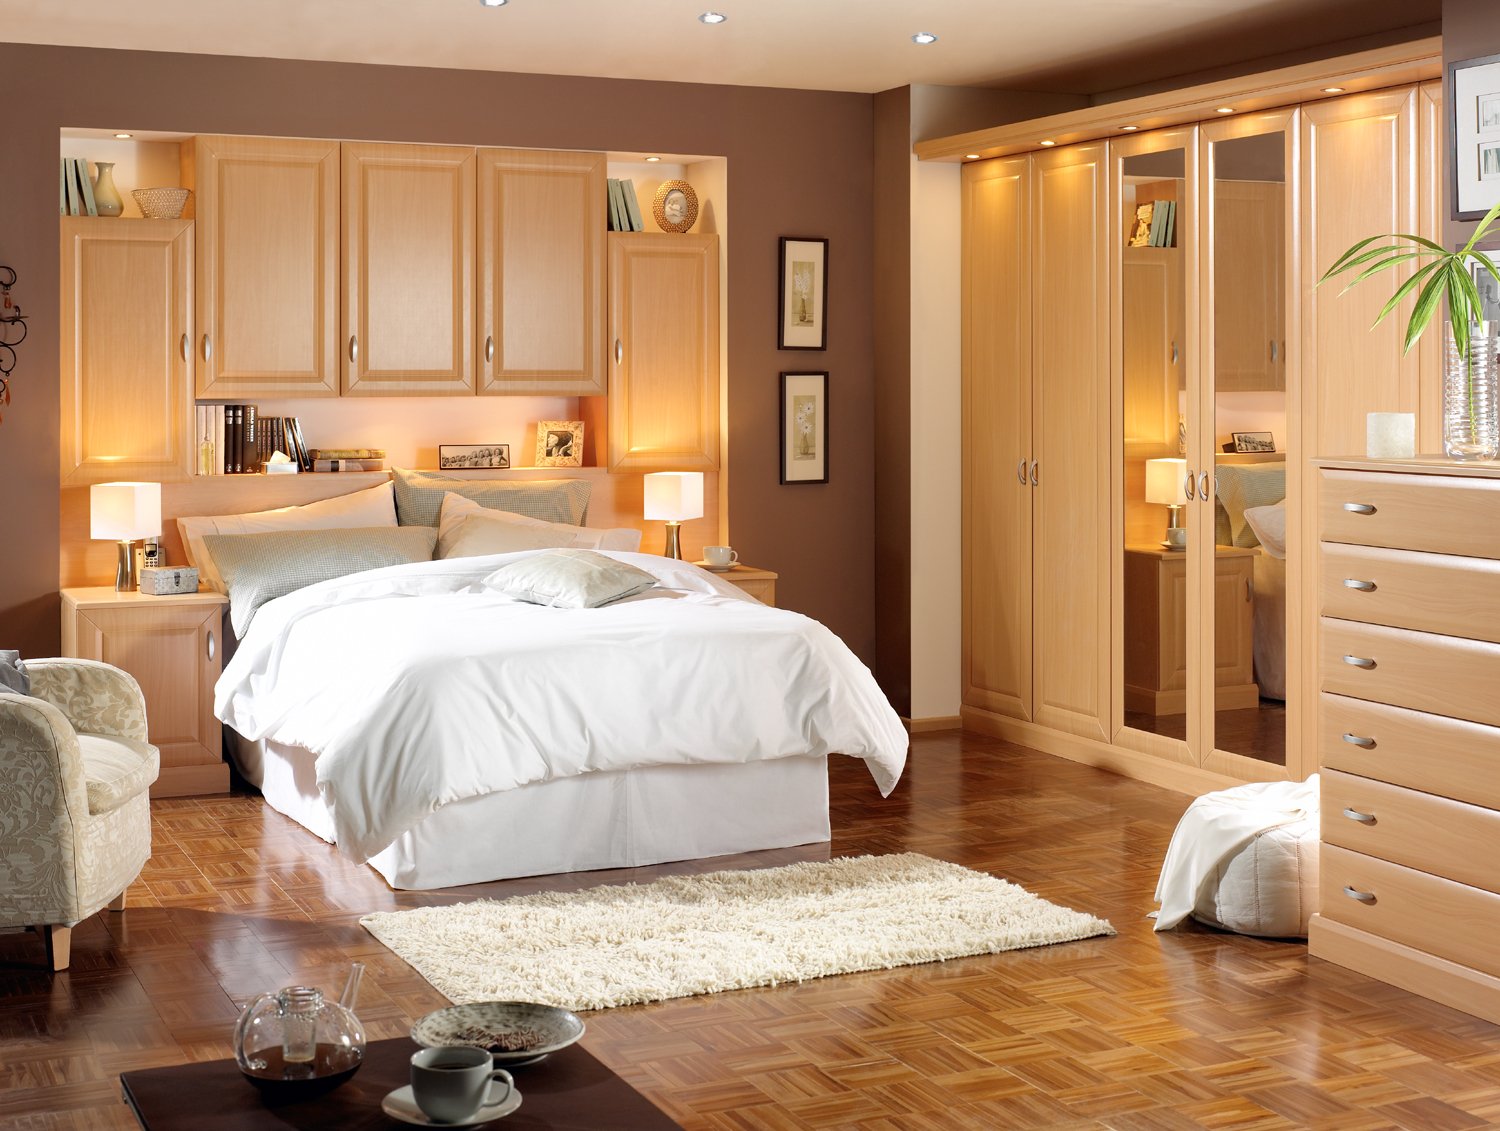 Remarkable Bedroom Design Ideas 1500 x 1131 · 259 kB · jpeg